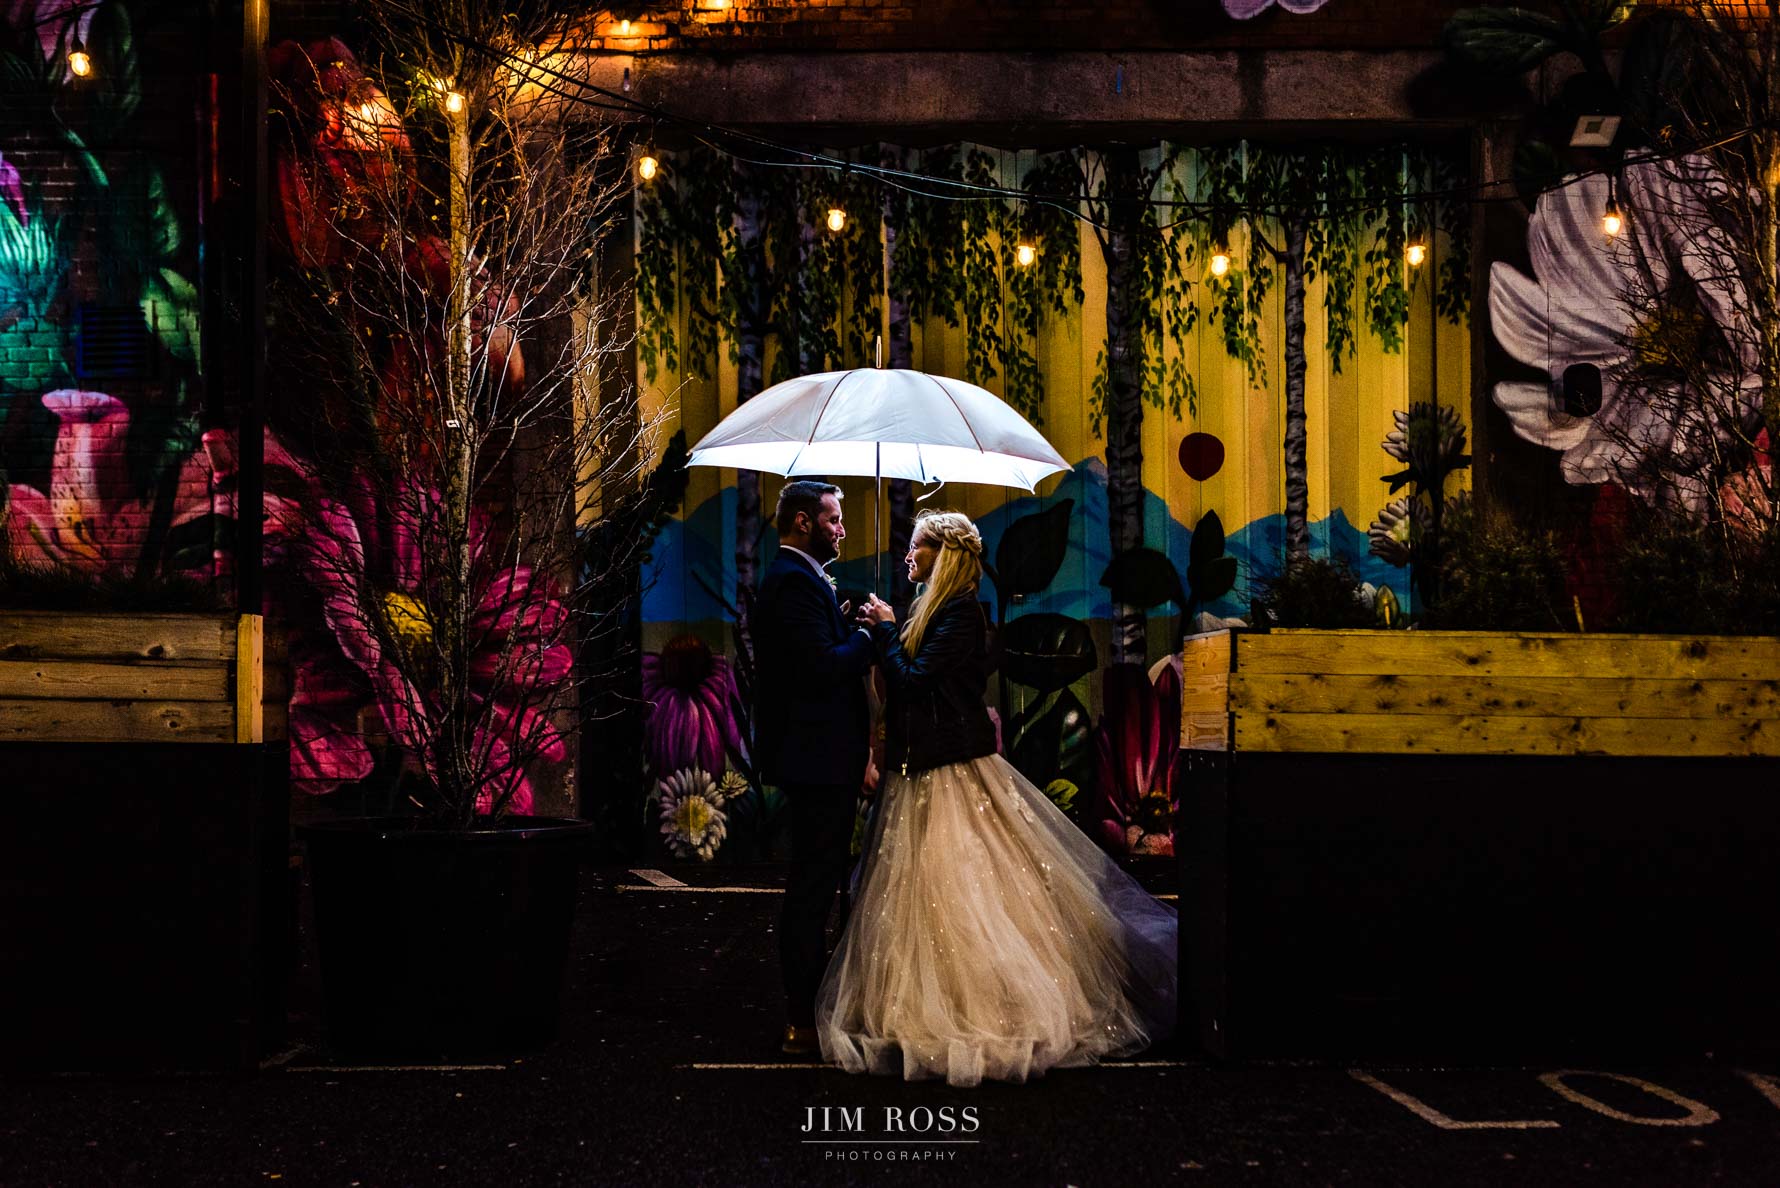 Colourful night portrait under umbrella